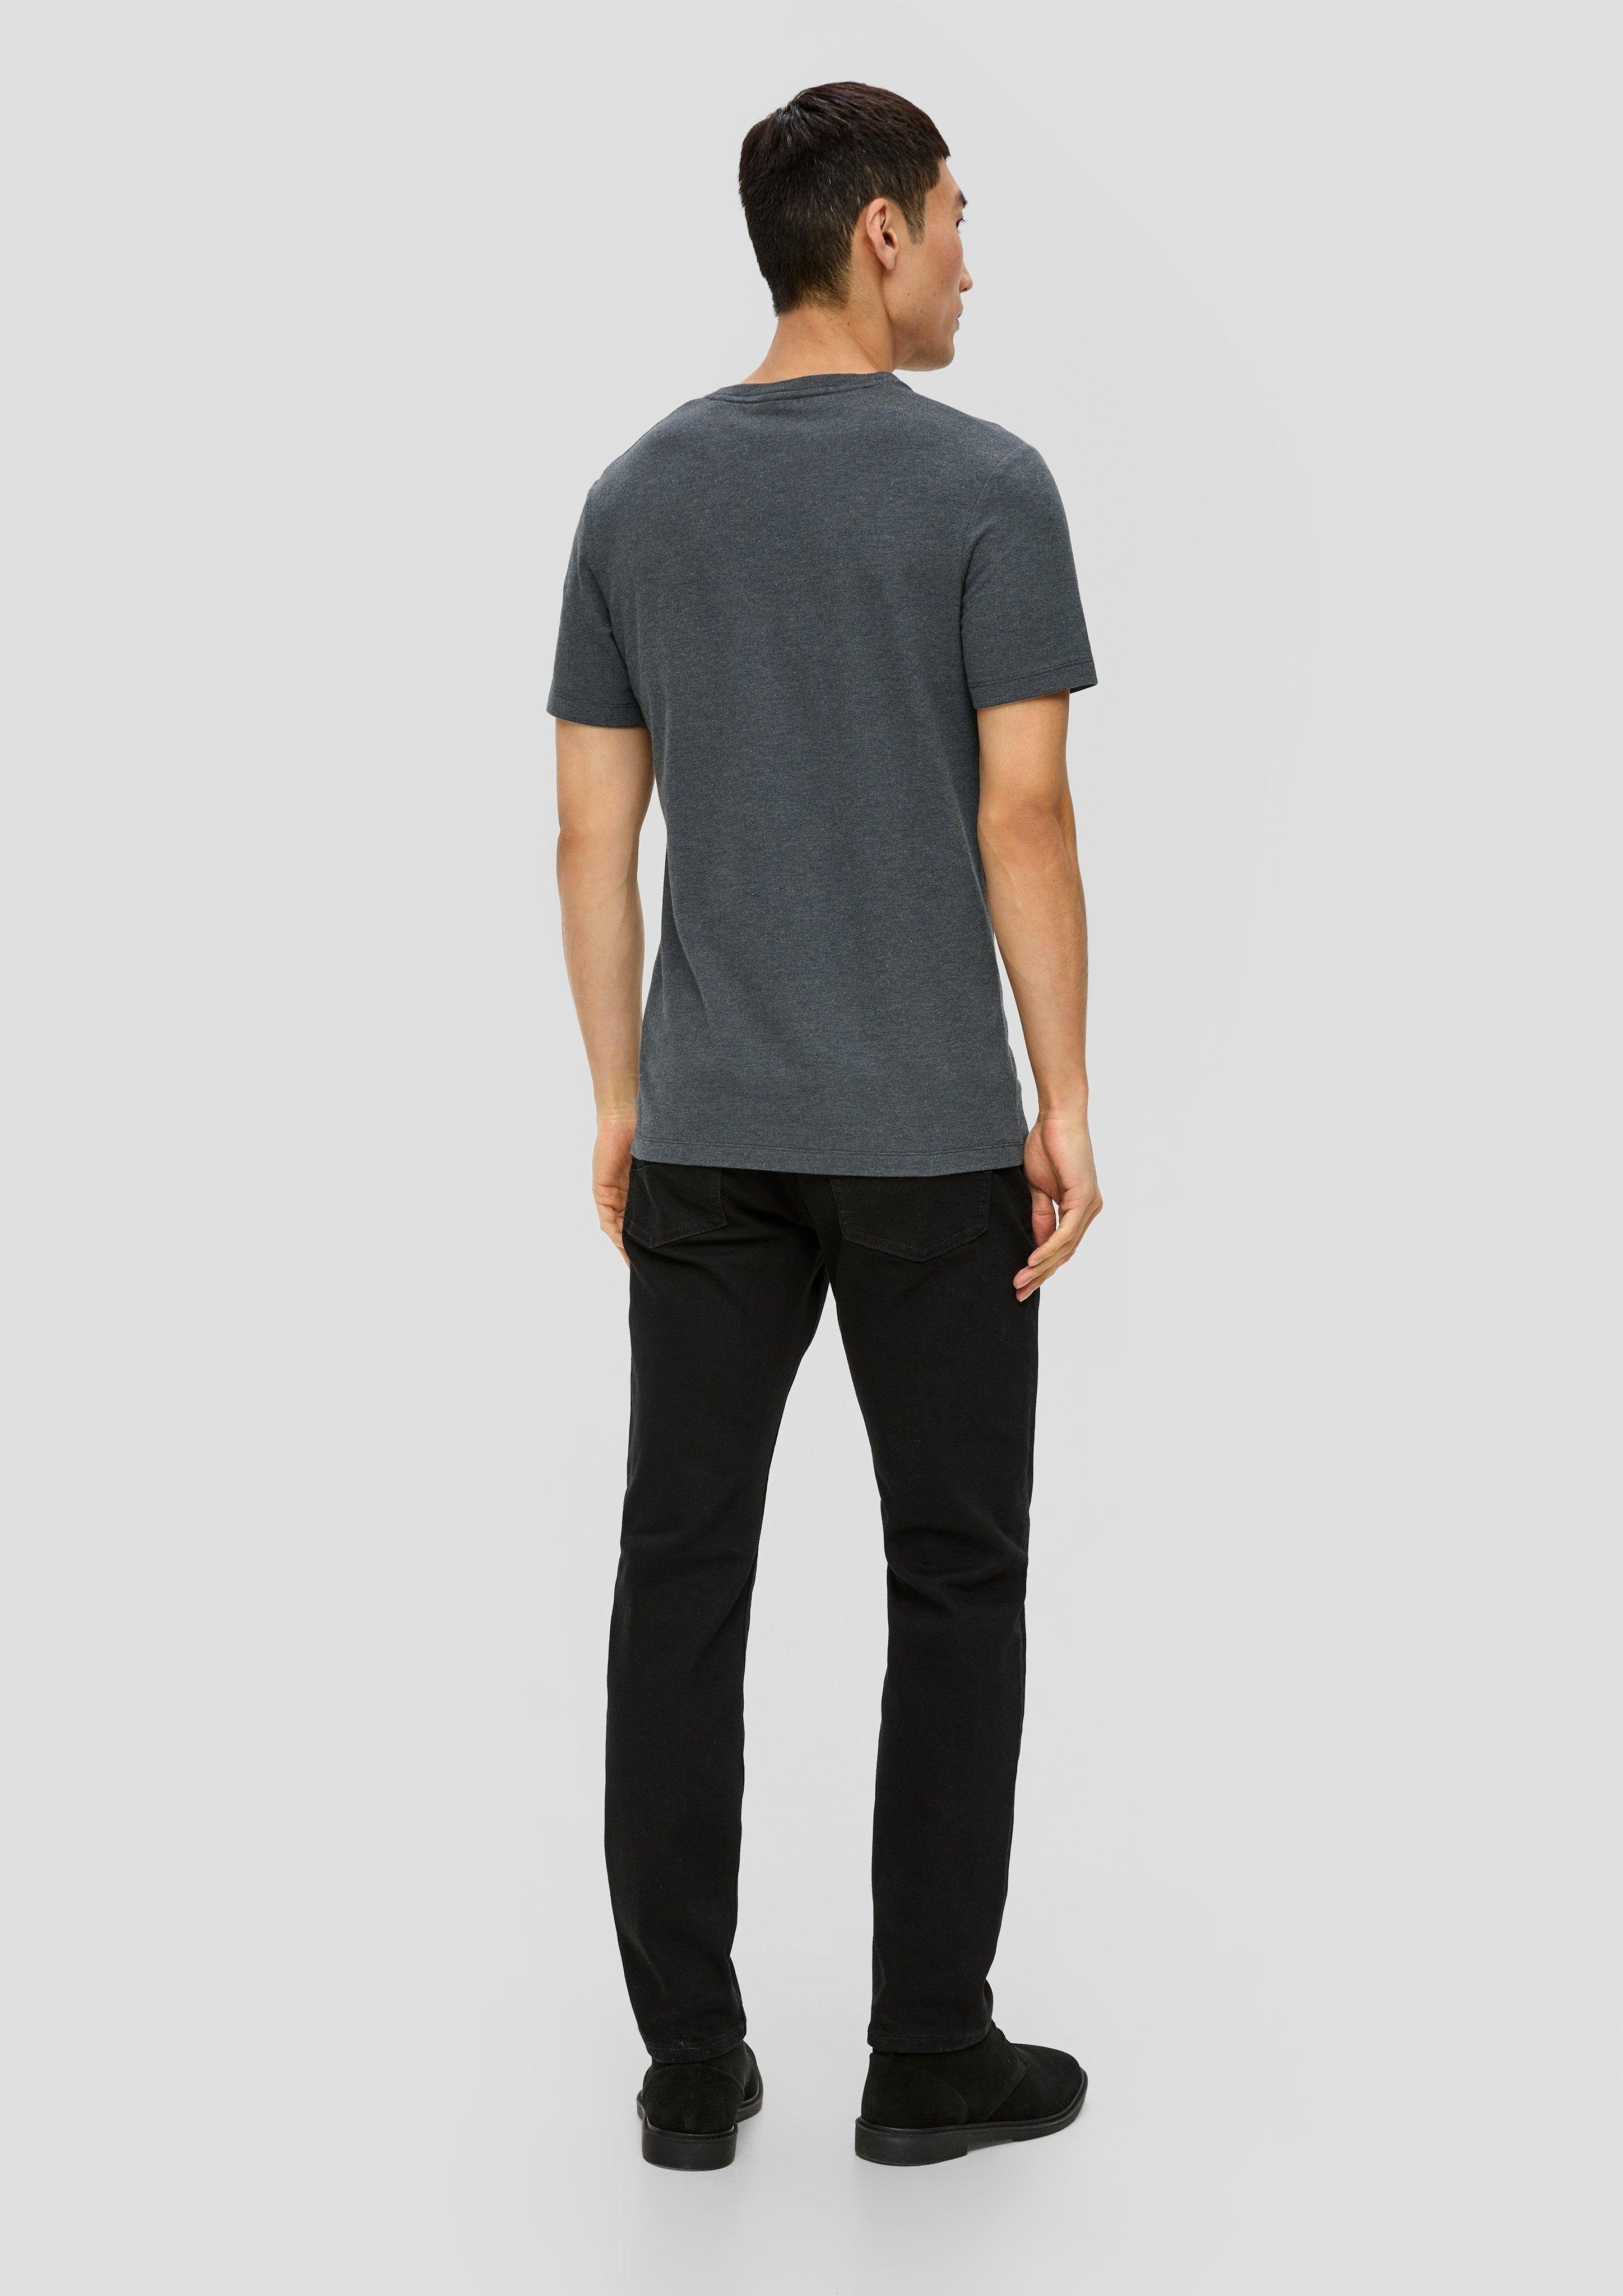 Kurzarmshirt mit s.Oliver T-Shirt dunkelgrau Piqué-Struktur Blende